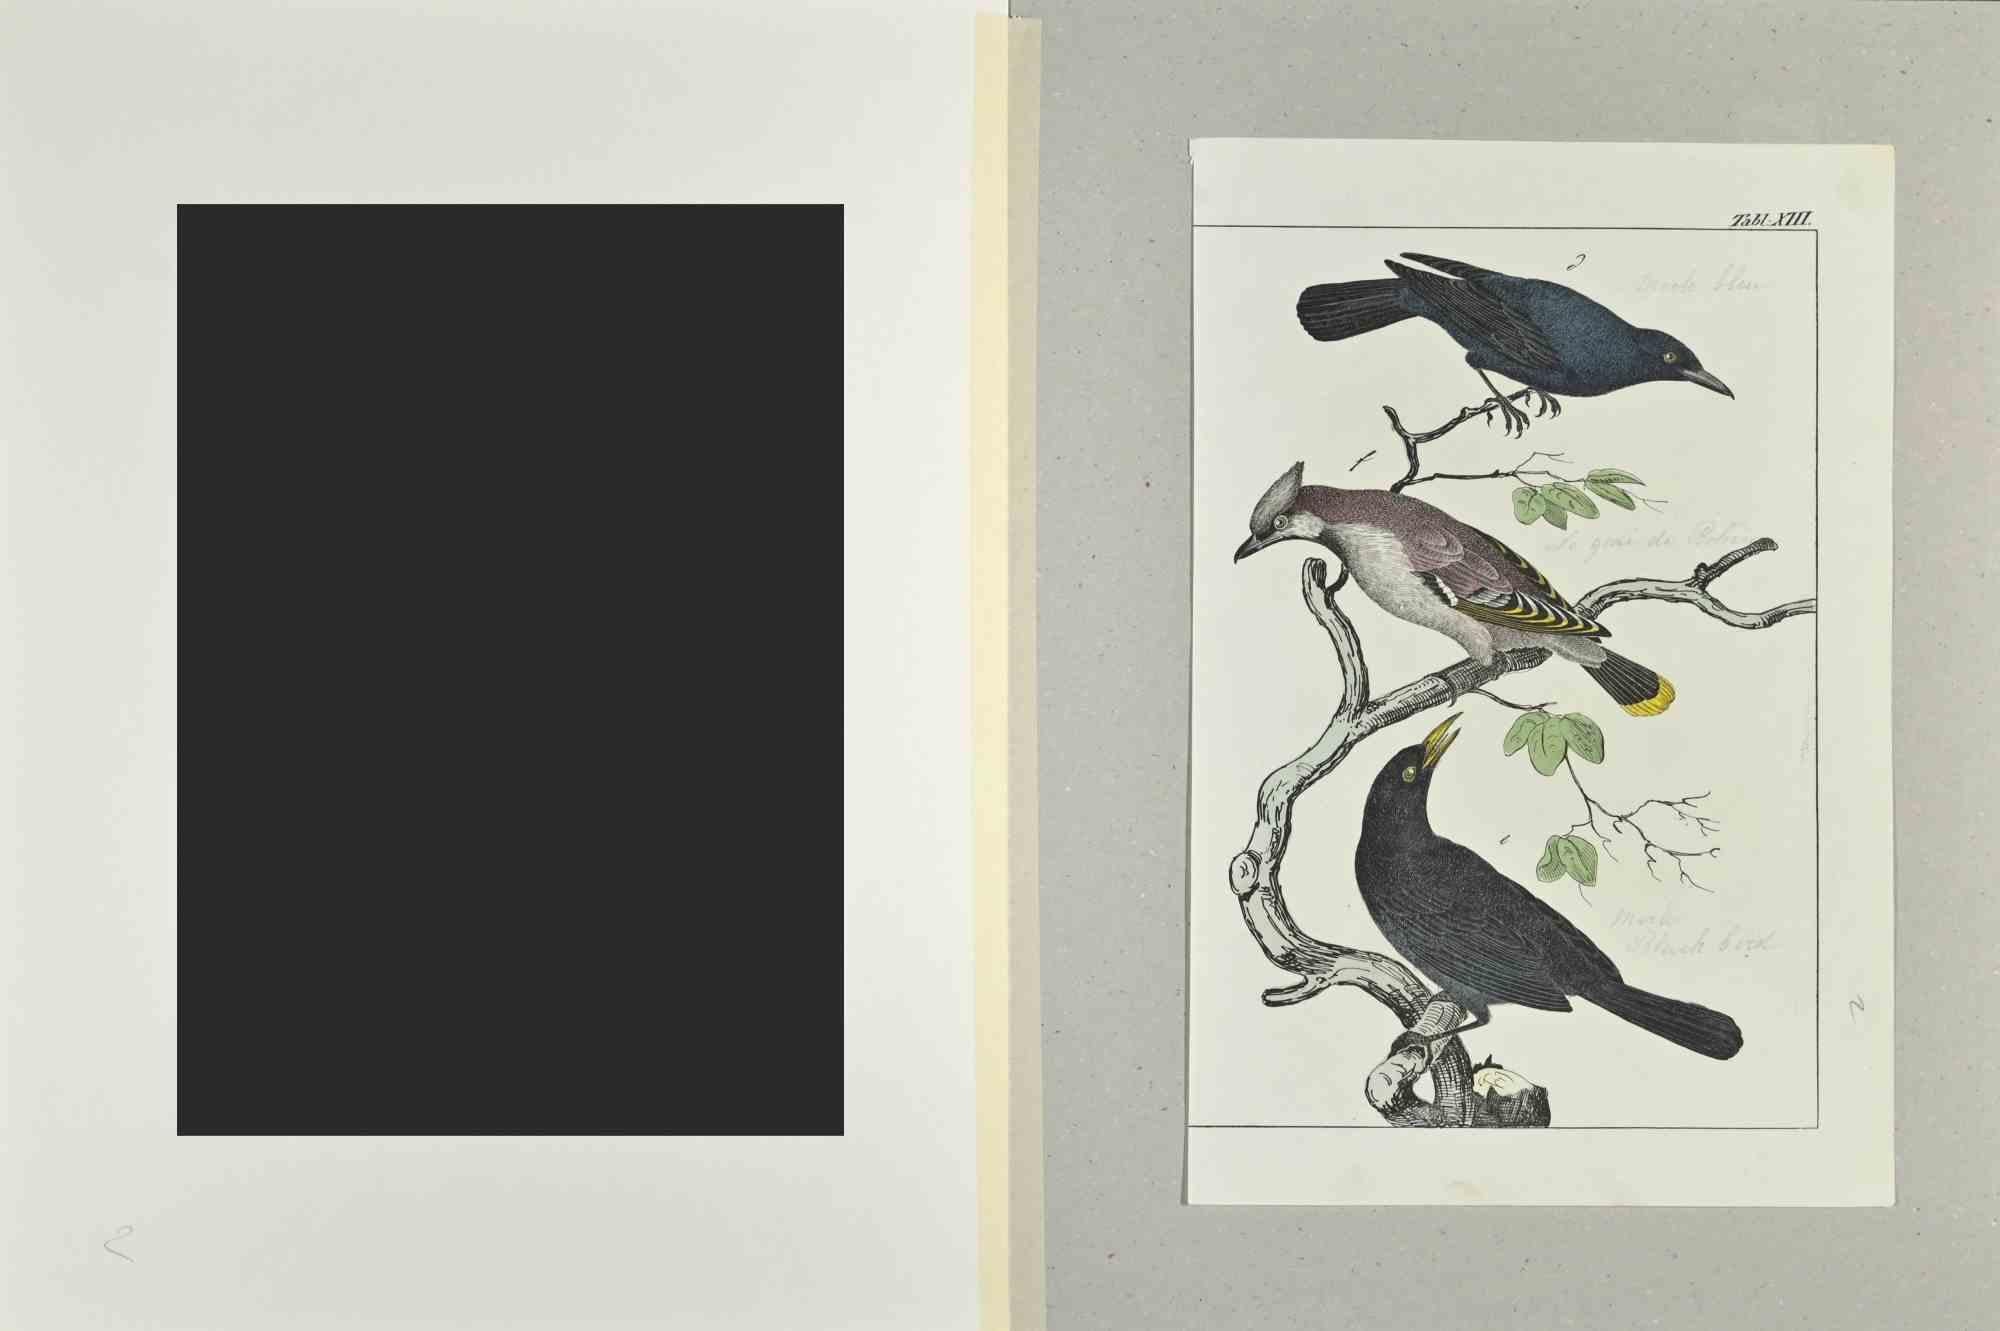 Black Bird is an Etching hand colored realized by Gotthilf Heinrich von Schubert - Johann Friedrich Naumann, Illustration from Natural history of birds in pictures, published by Stuttgart and Esslingen, Schreiber and Schill 1840 ca. 

Johann